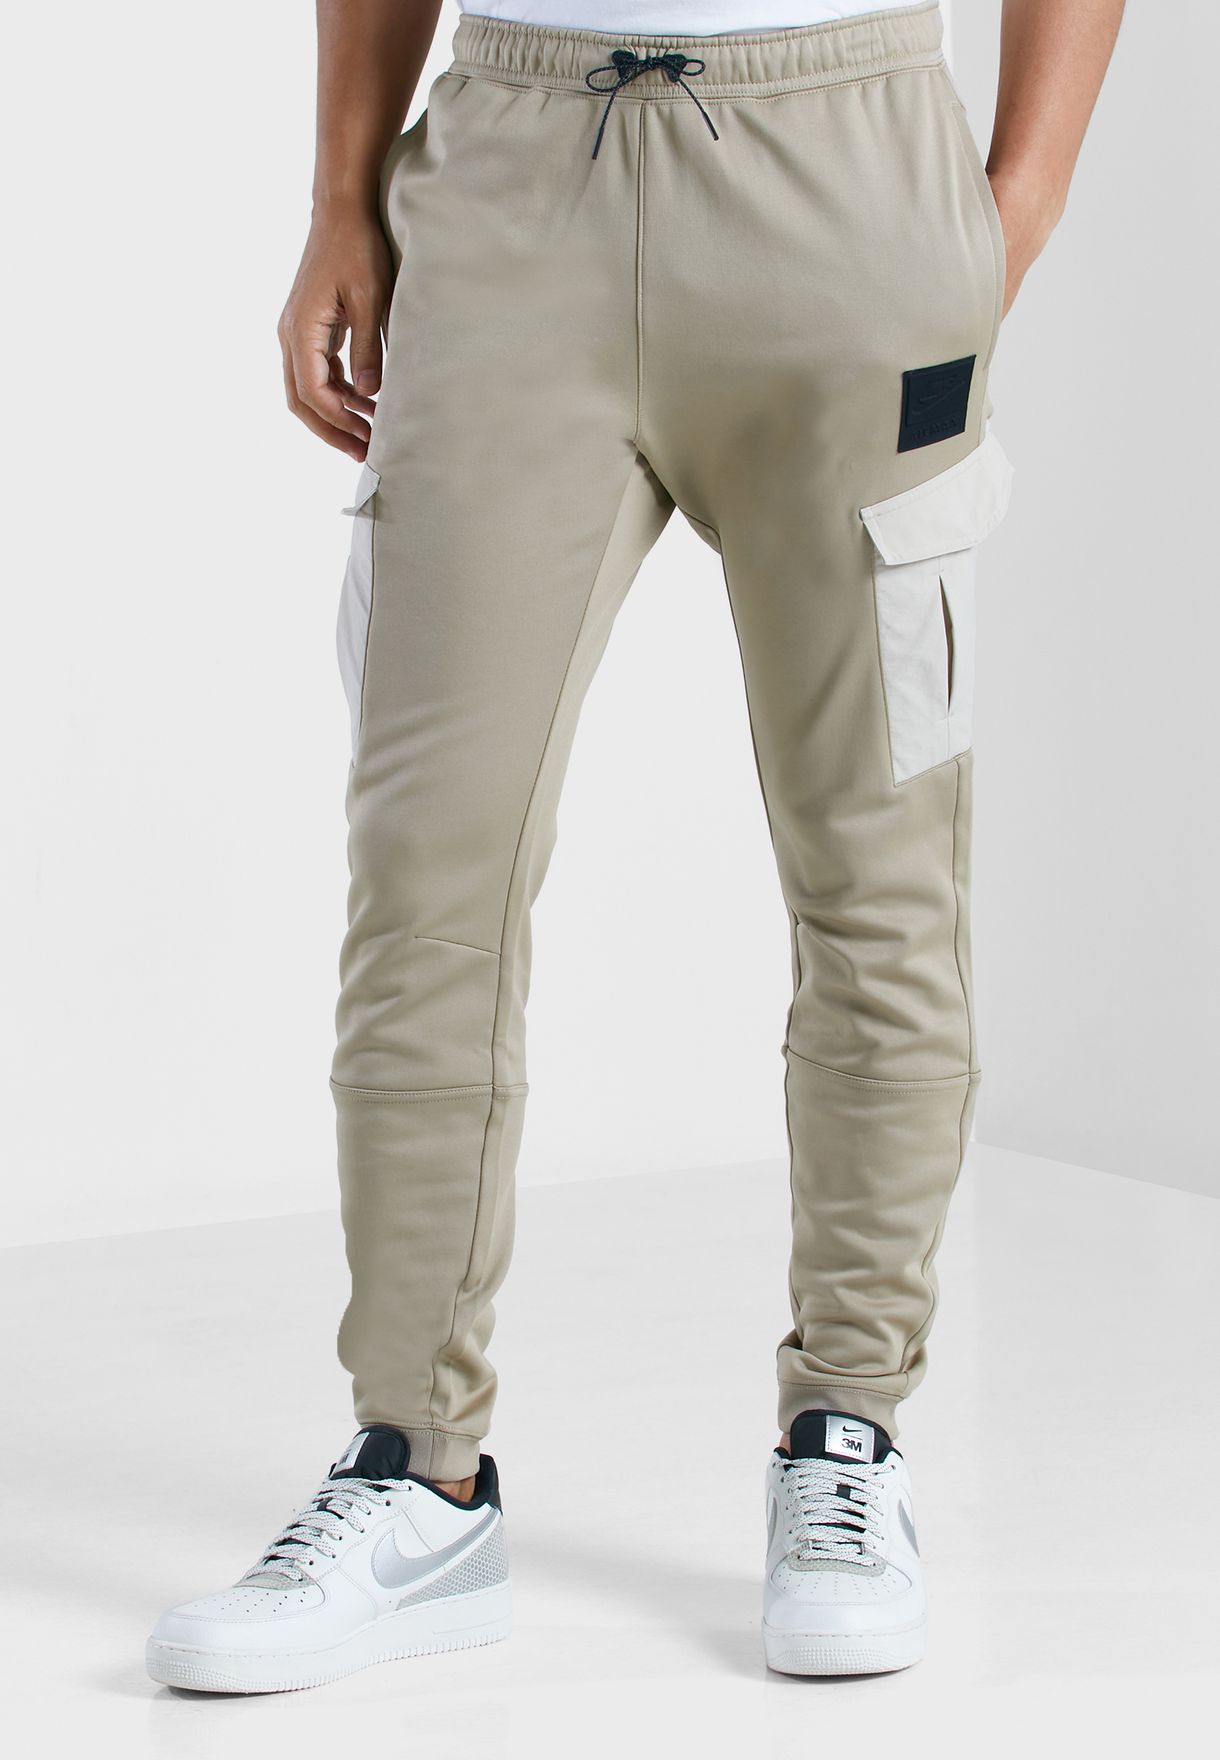 Buy Nike khaki Nsw Air Max Sweatpants for Men in Riyadh, Jeddah